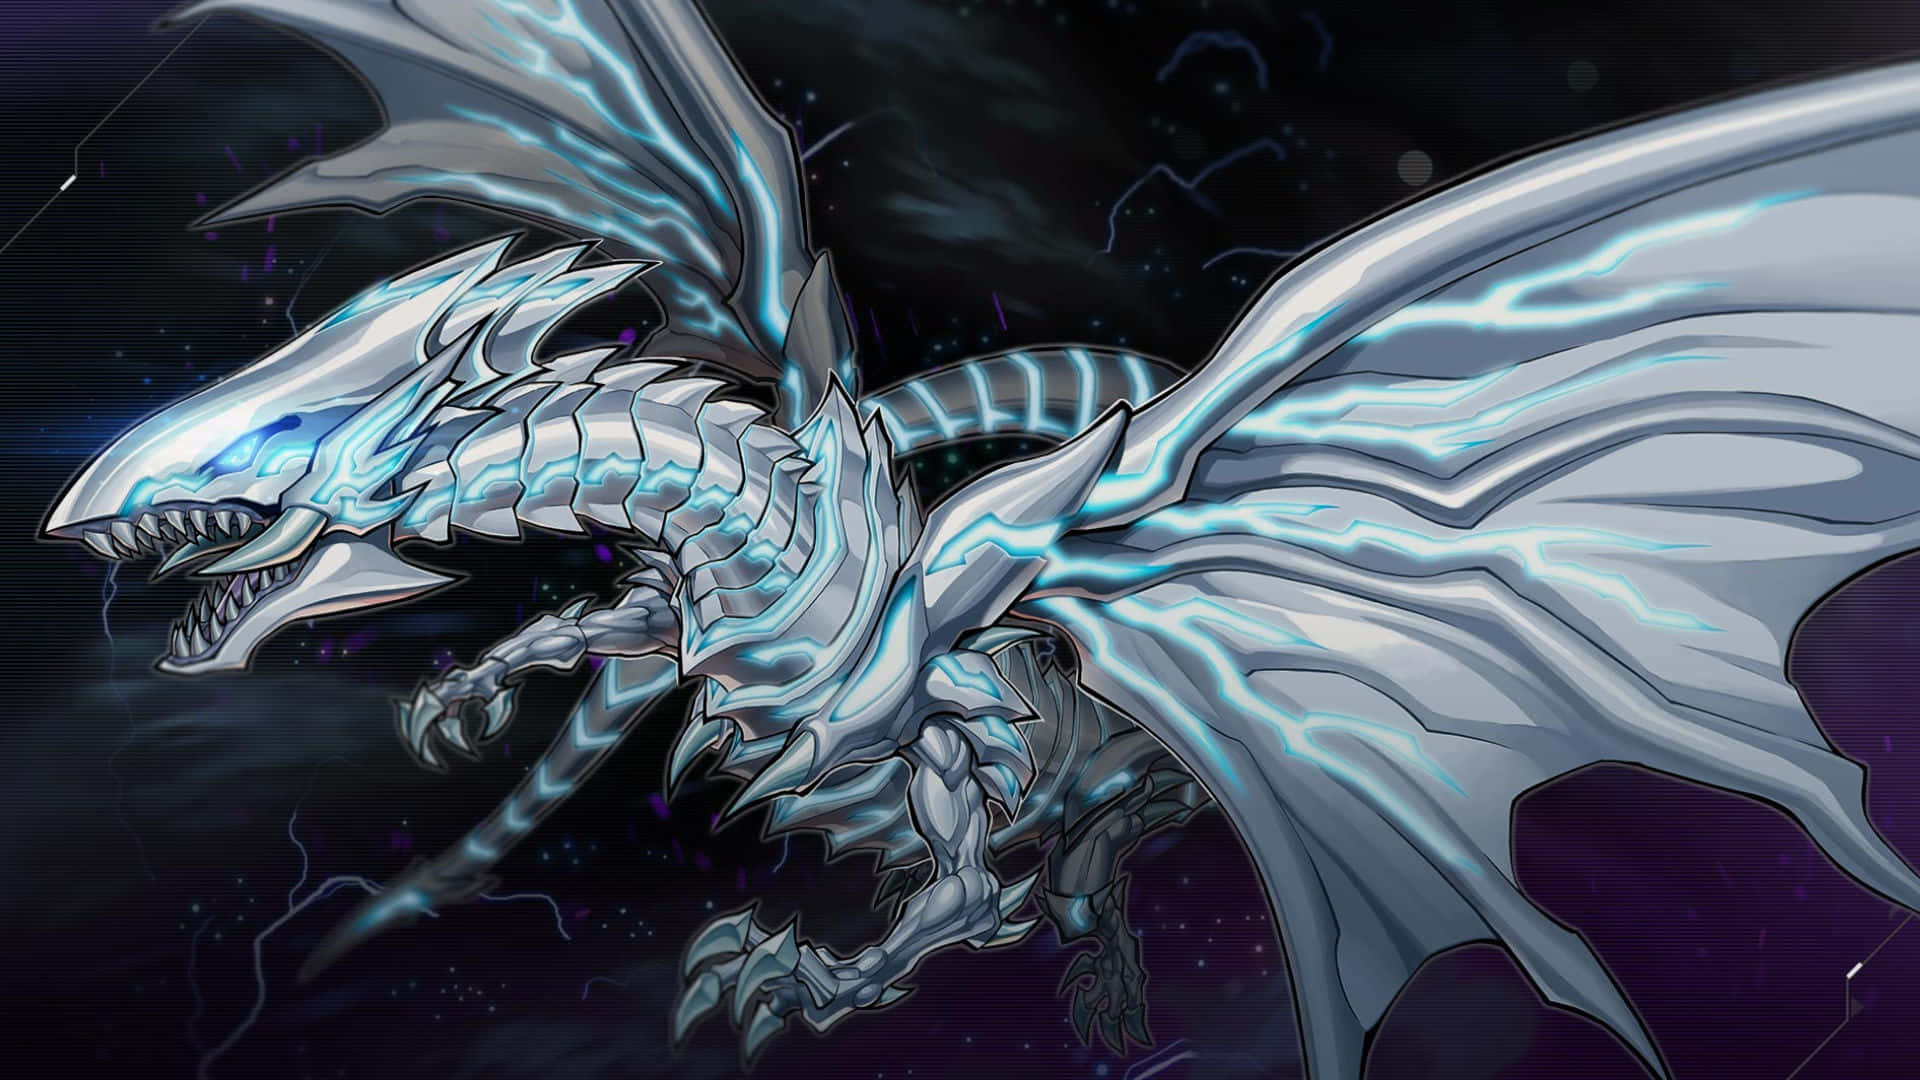 Caption: Epic Duel of Yugioh Dragons Wallpaper